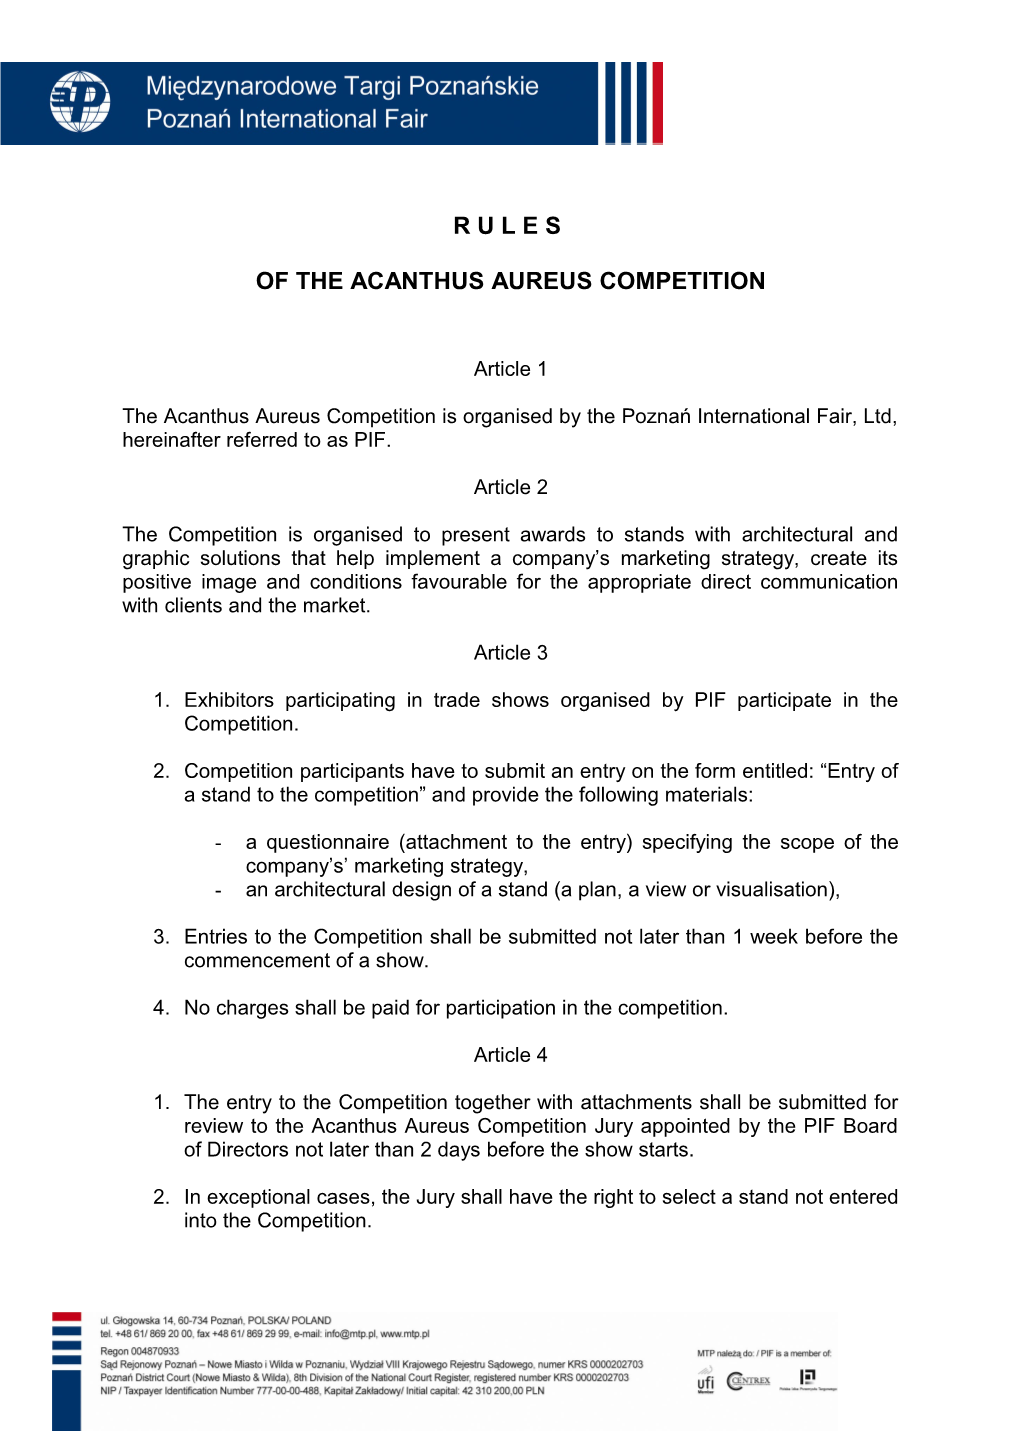 Of the Acanthus Aureus Competition